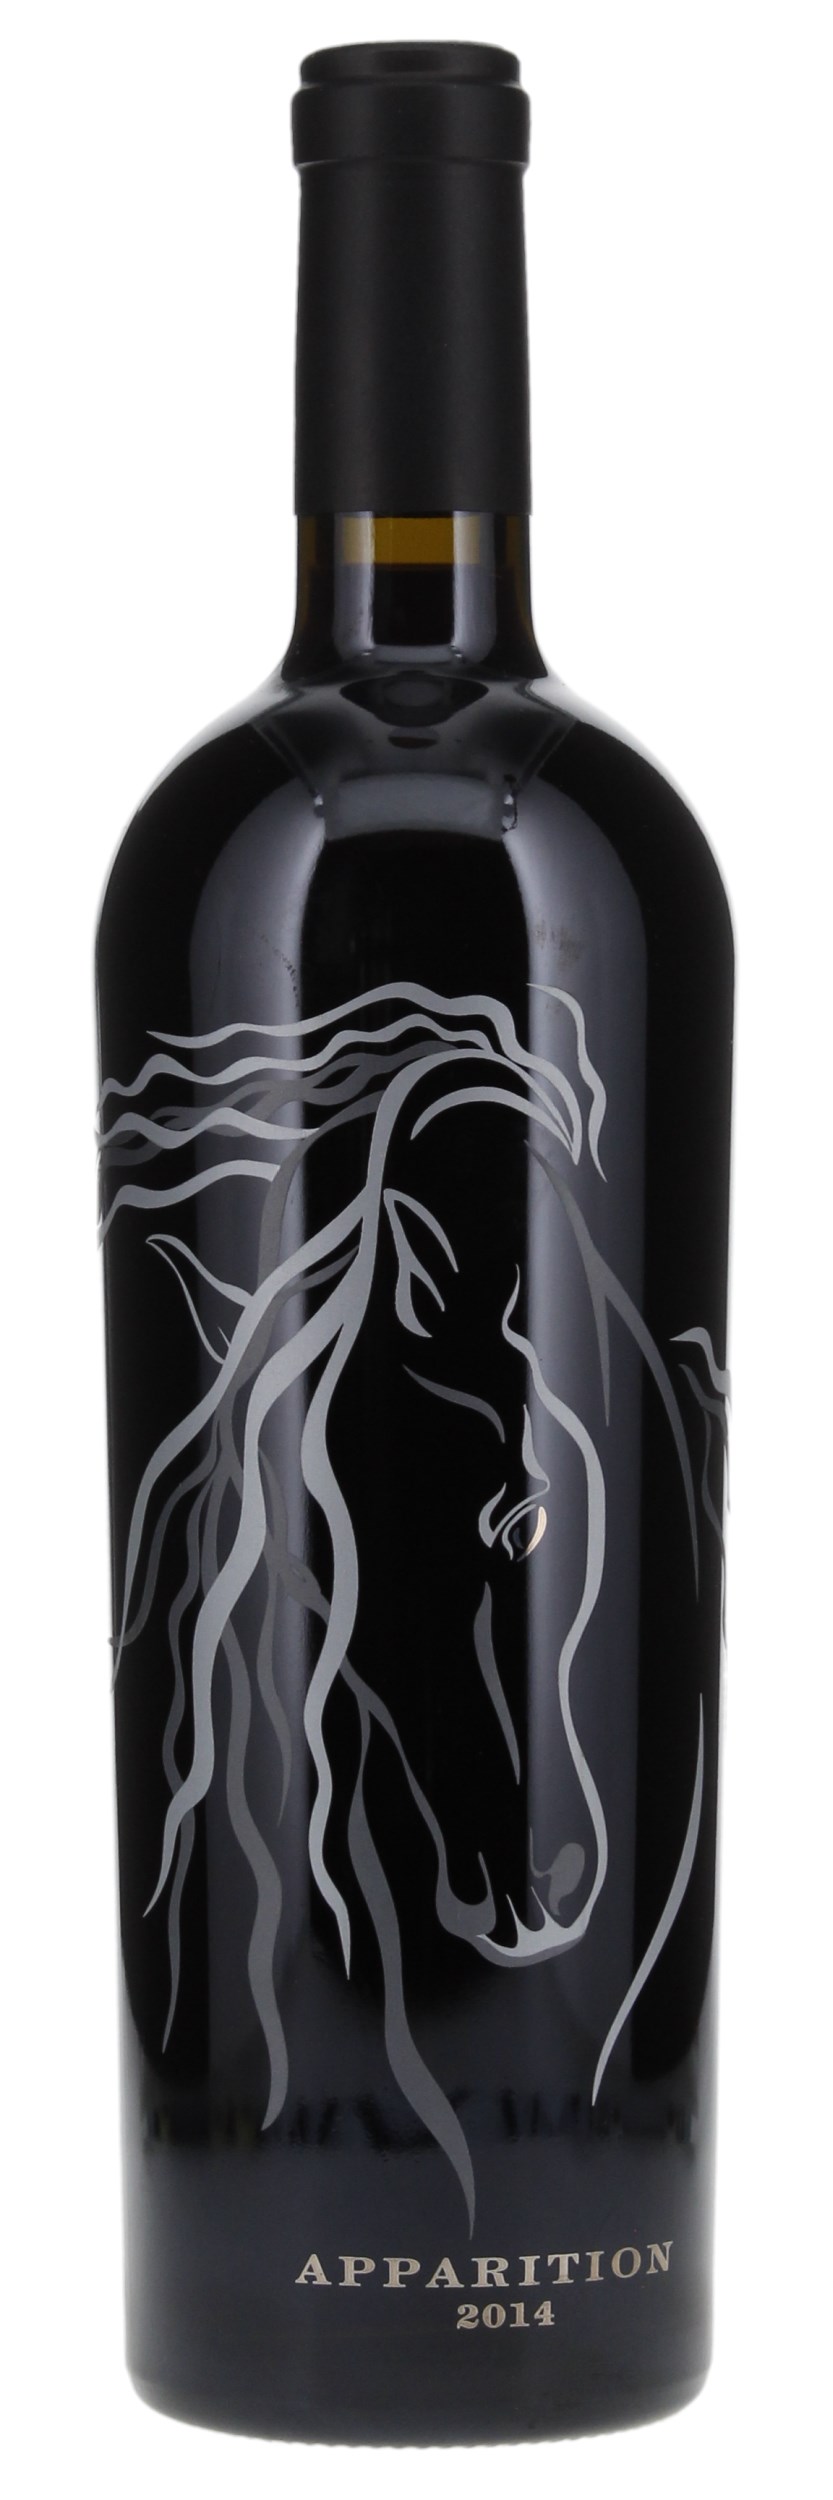 2014 Ghost Horse Vineyard Apparition Cabernet Sauvignon, 750ml